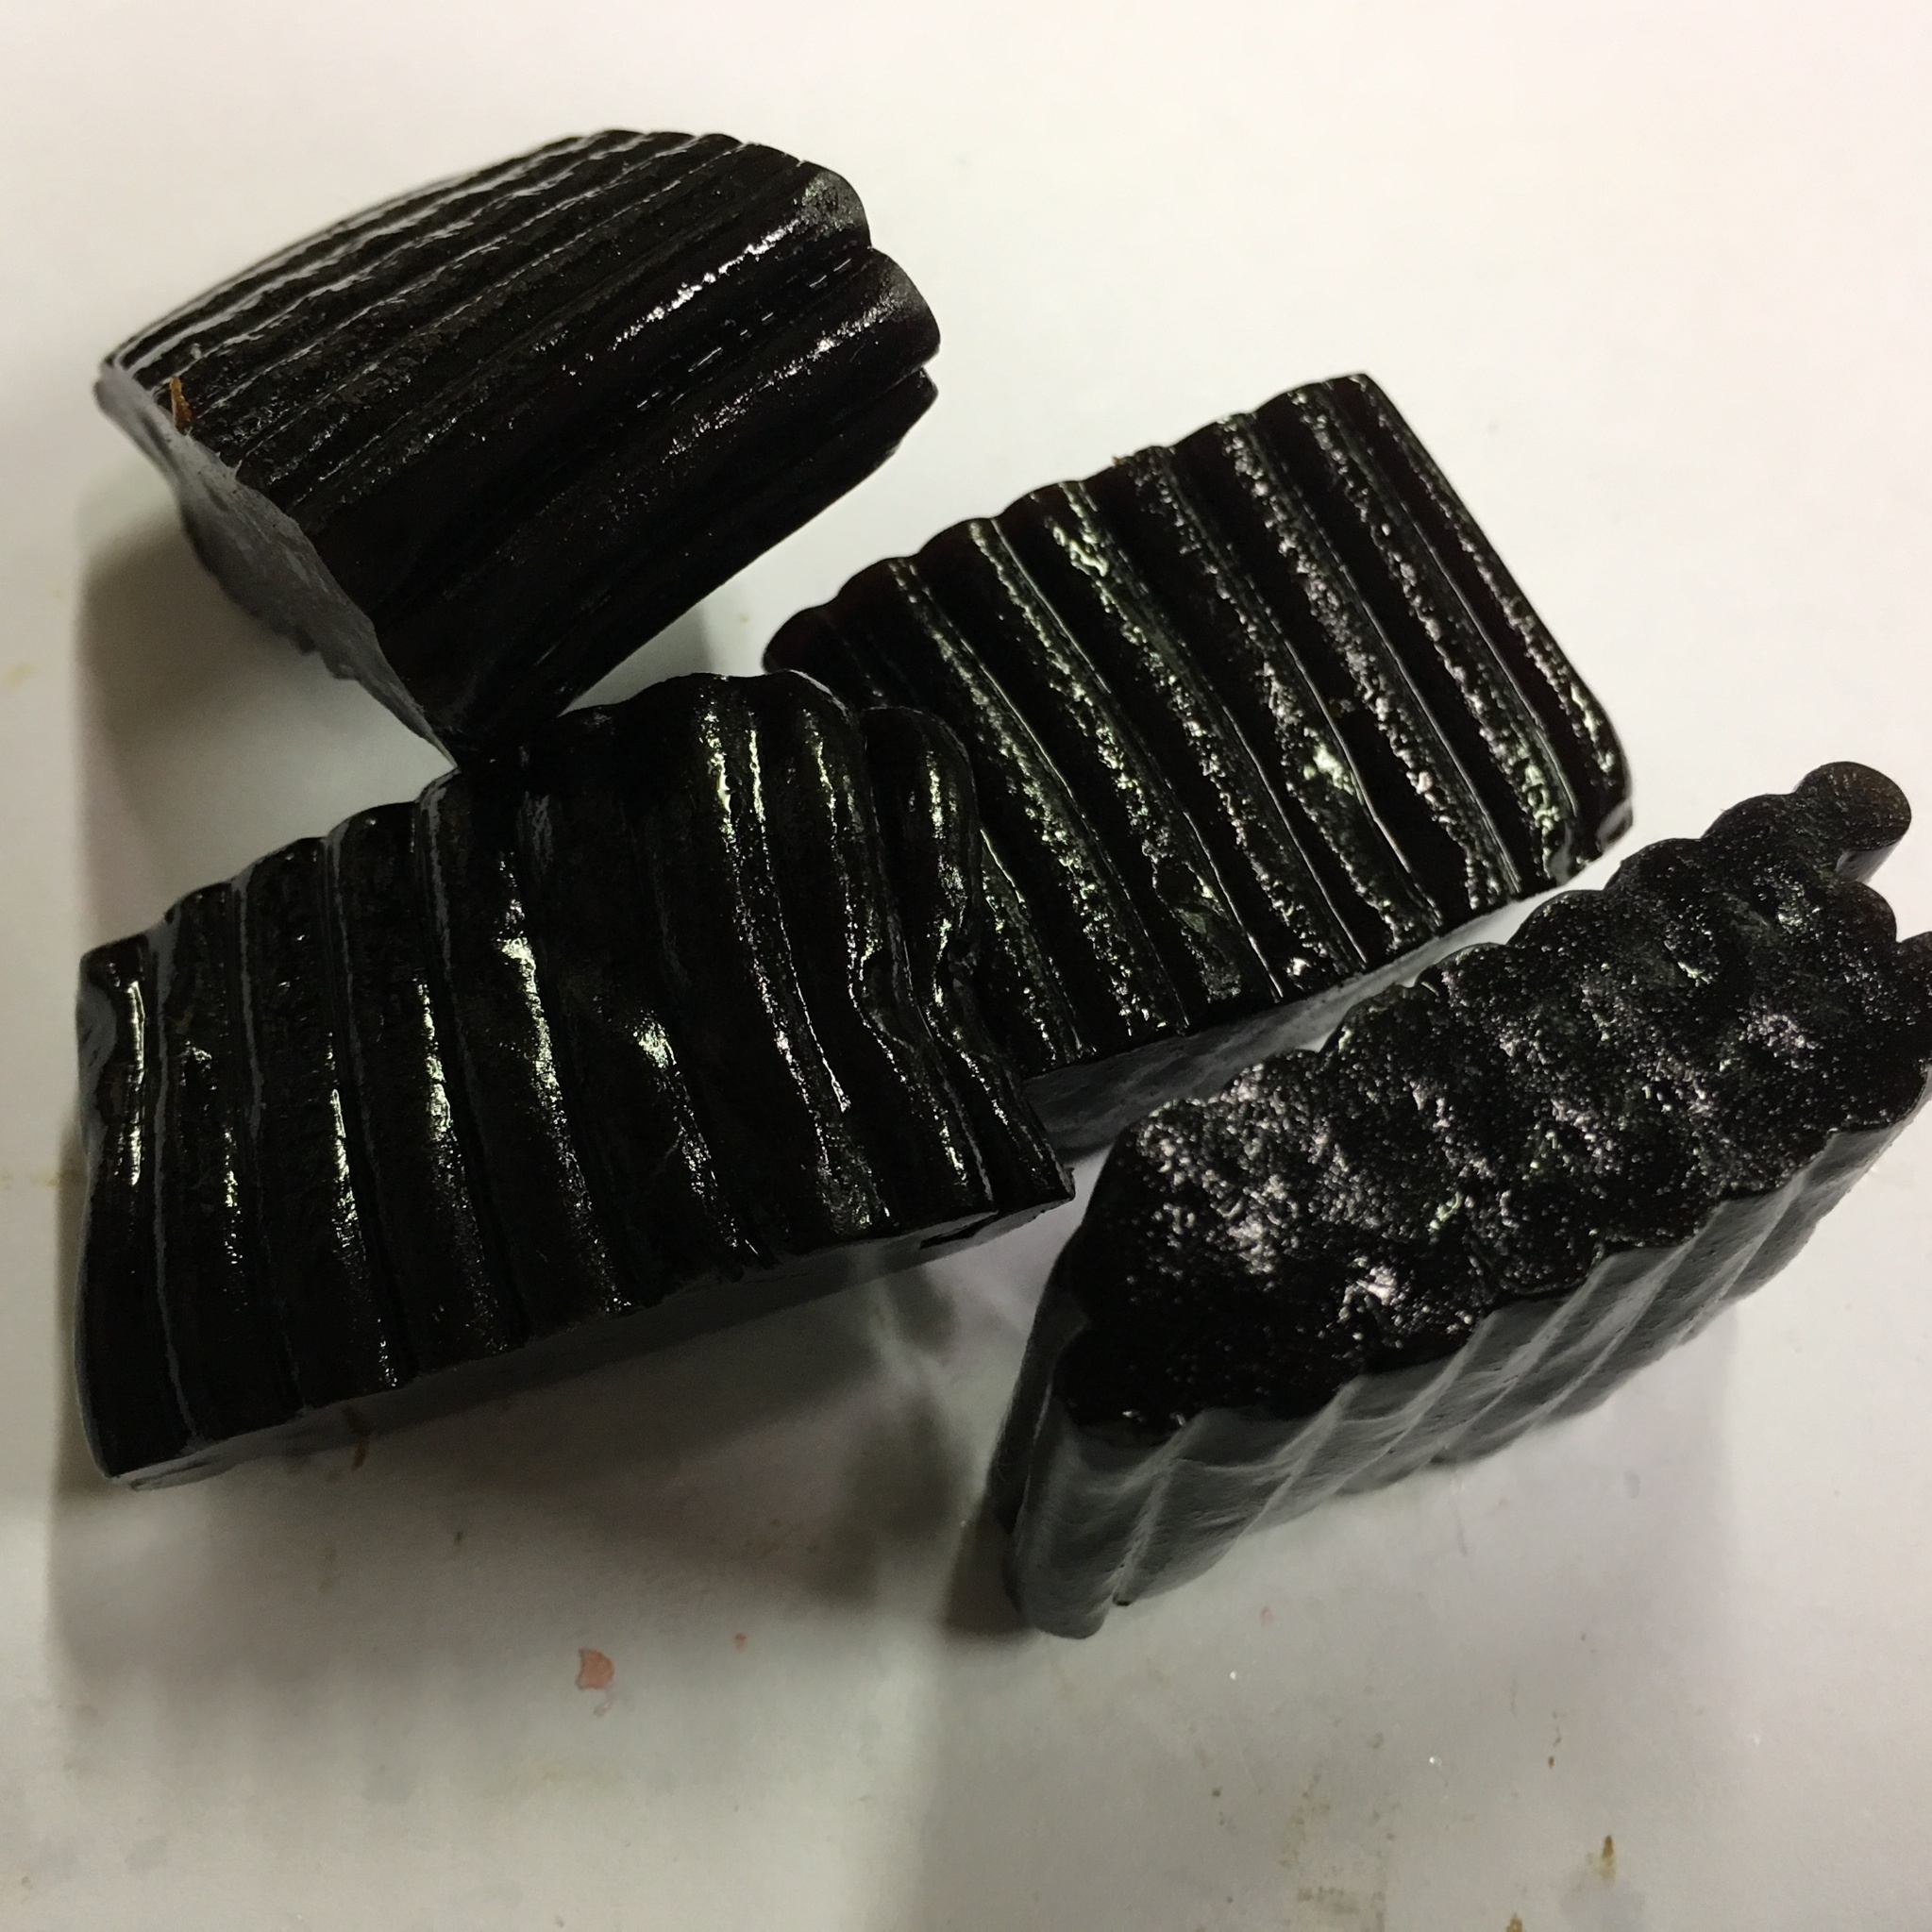 Rectangular shaped black licorice